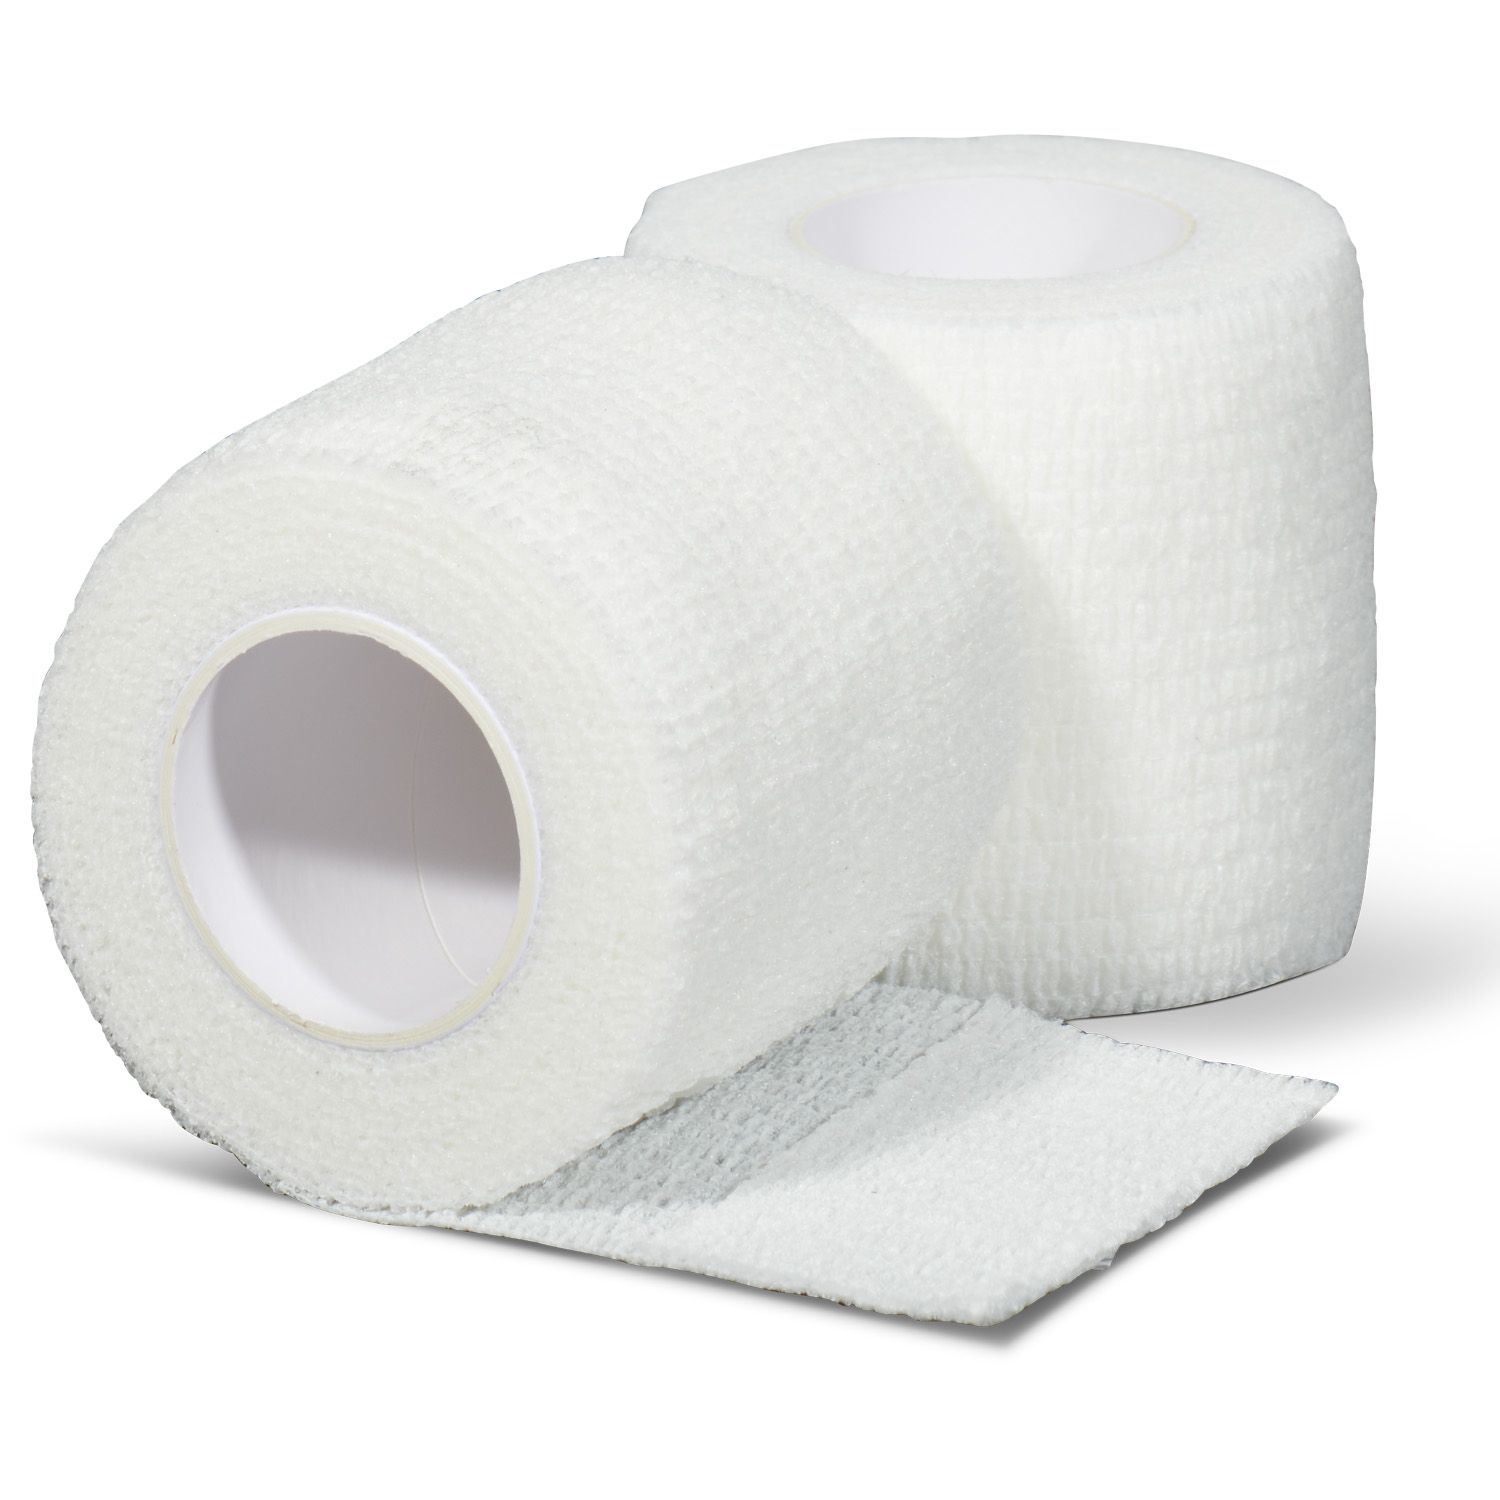 gladiator sports underwrap bandage per roll white 